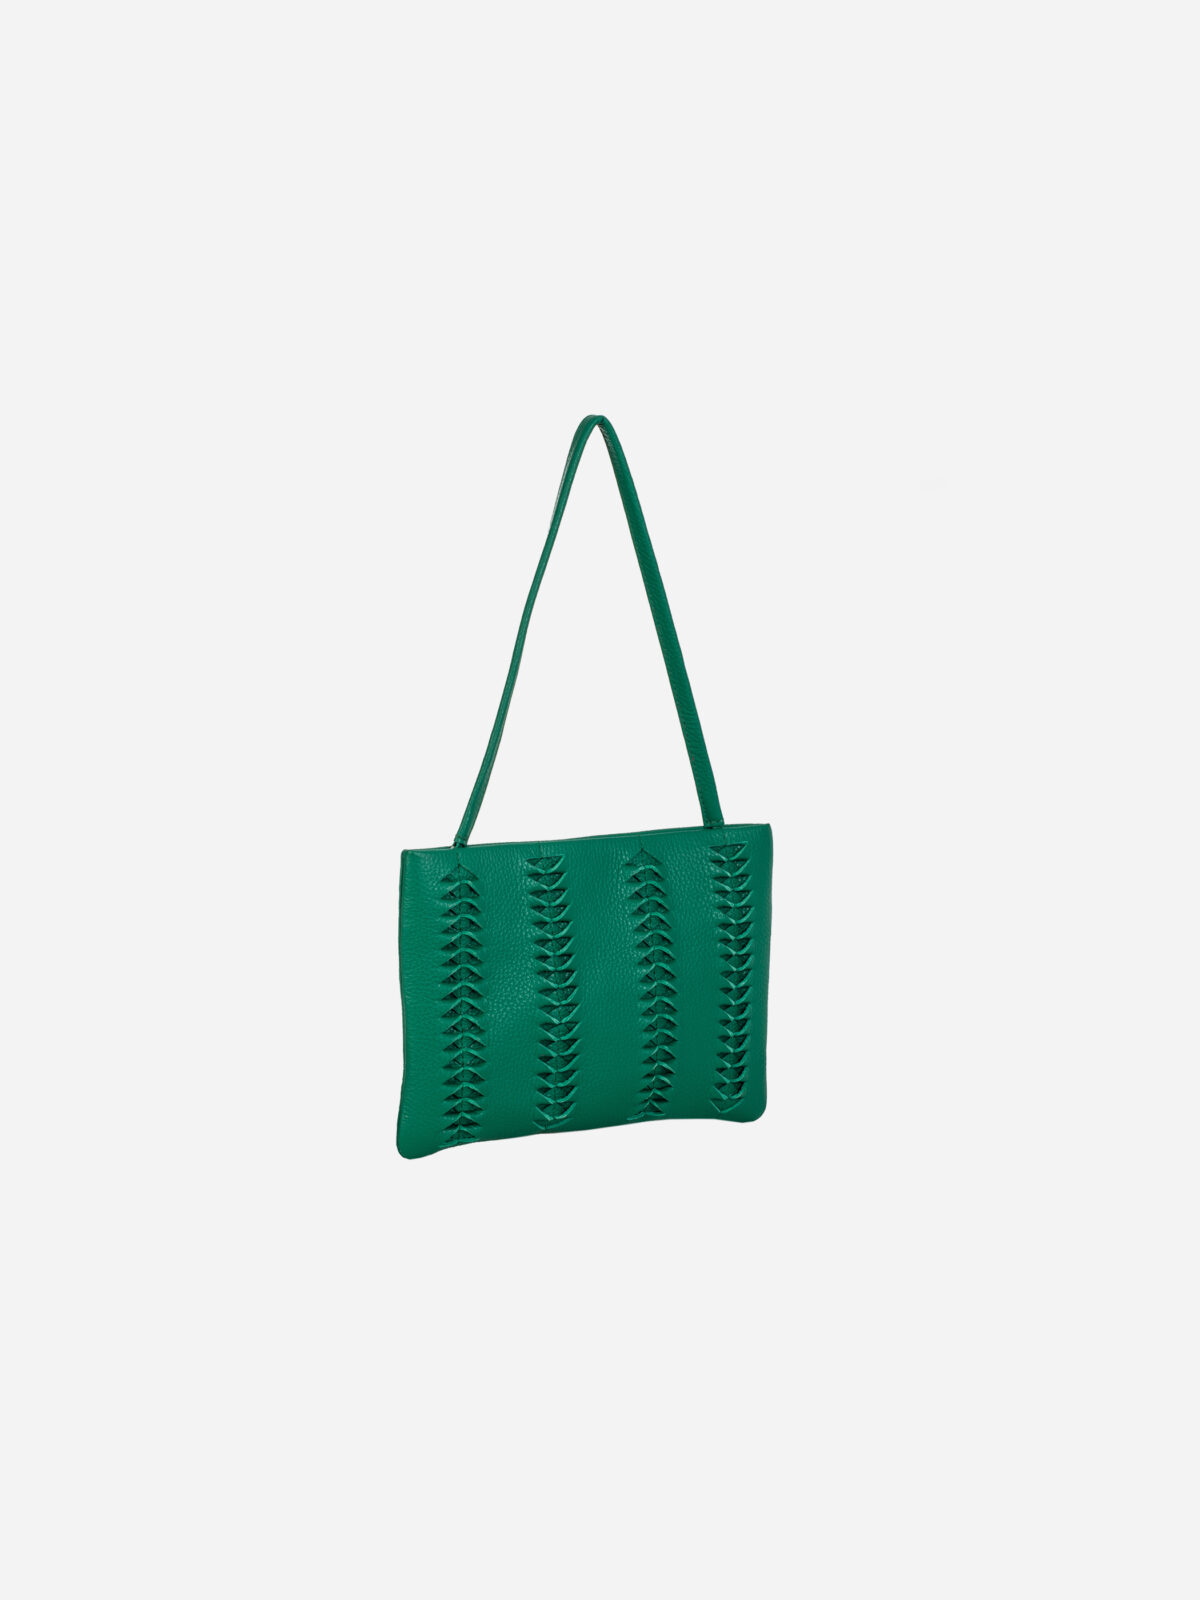 PARK_HOUSE_fishbone-clutch-irish-green-leather-bag-pochette-greek-designers-matchboxathens